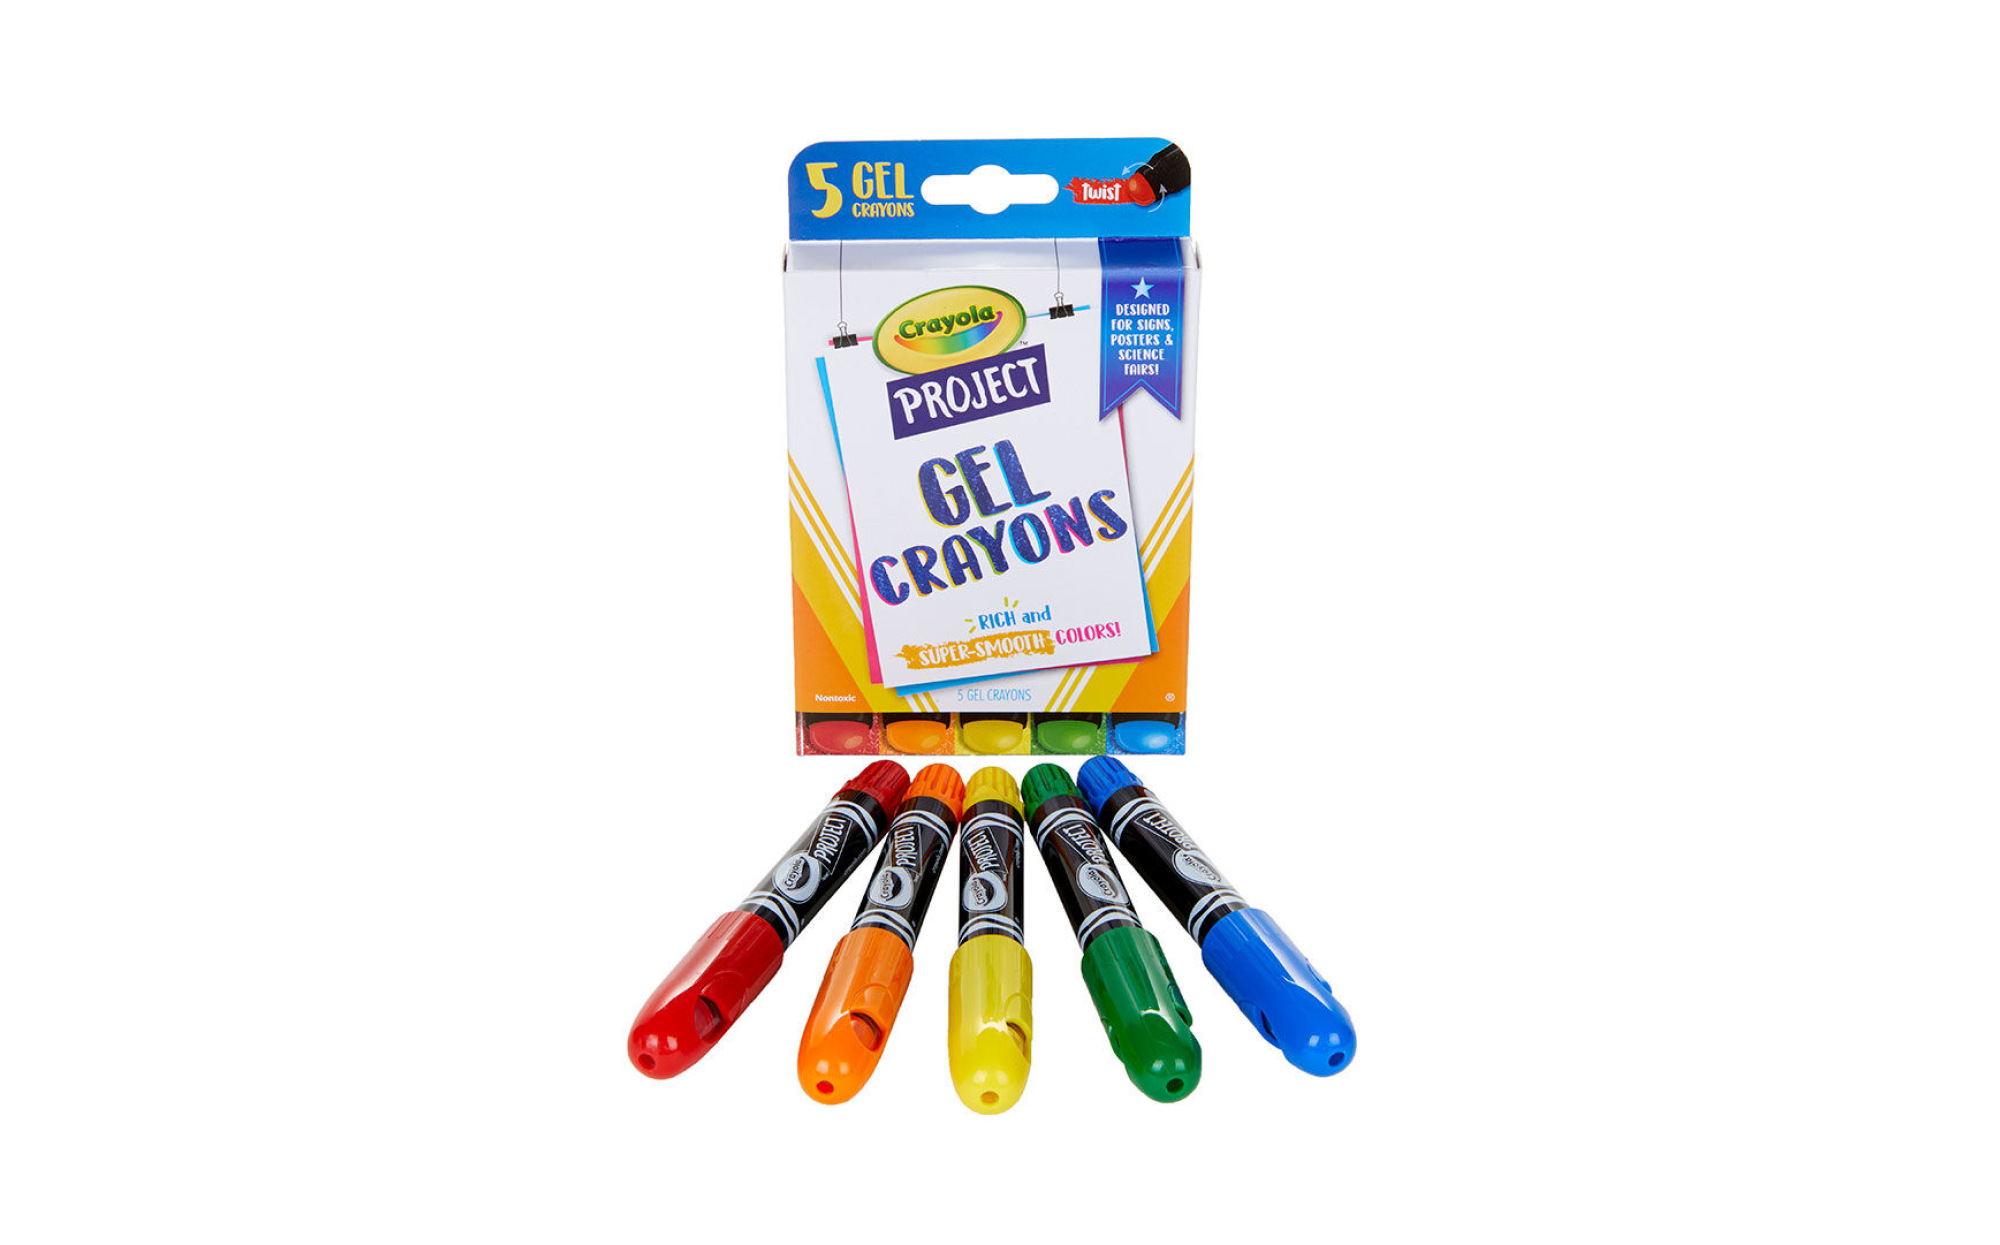 Crayola Colored Oil Pastel Sticks 16pc